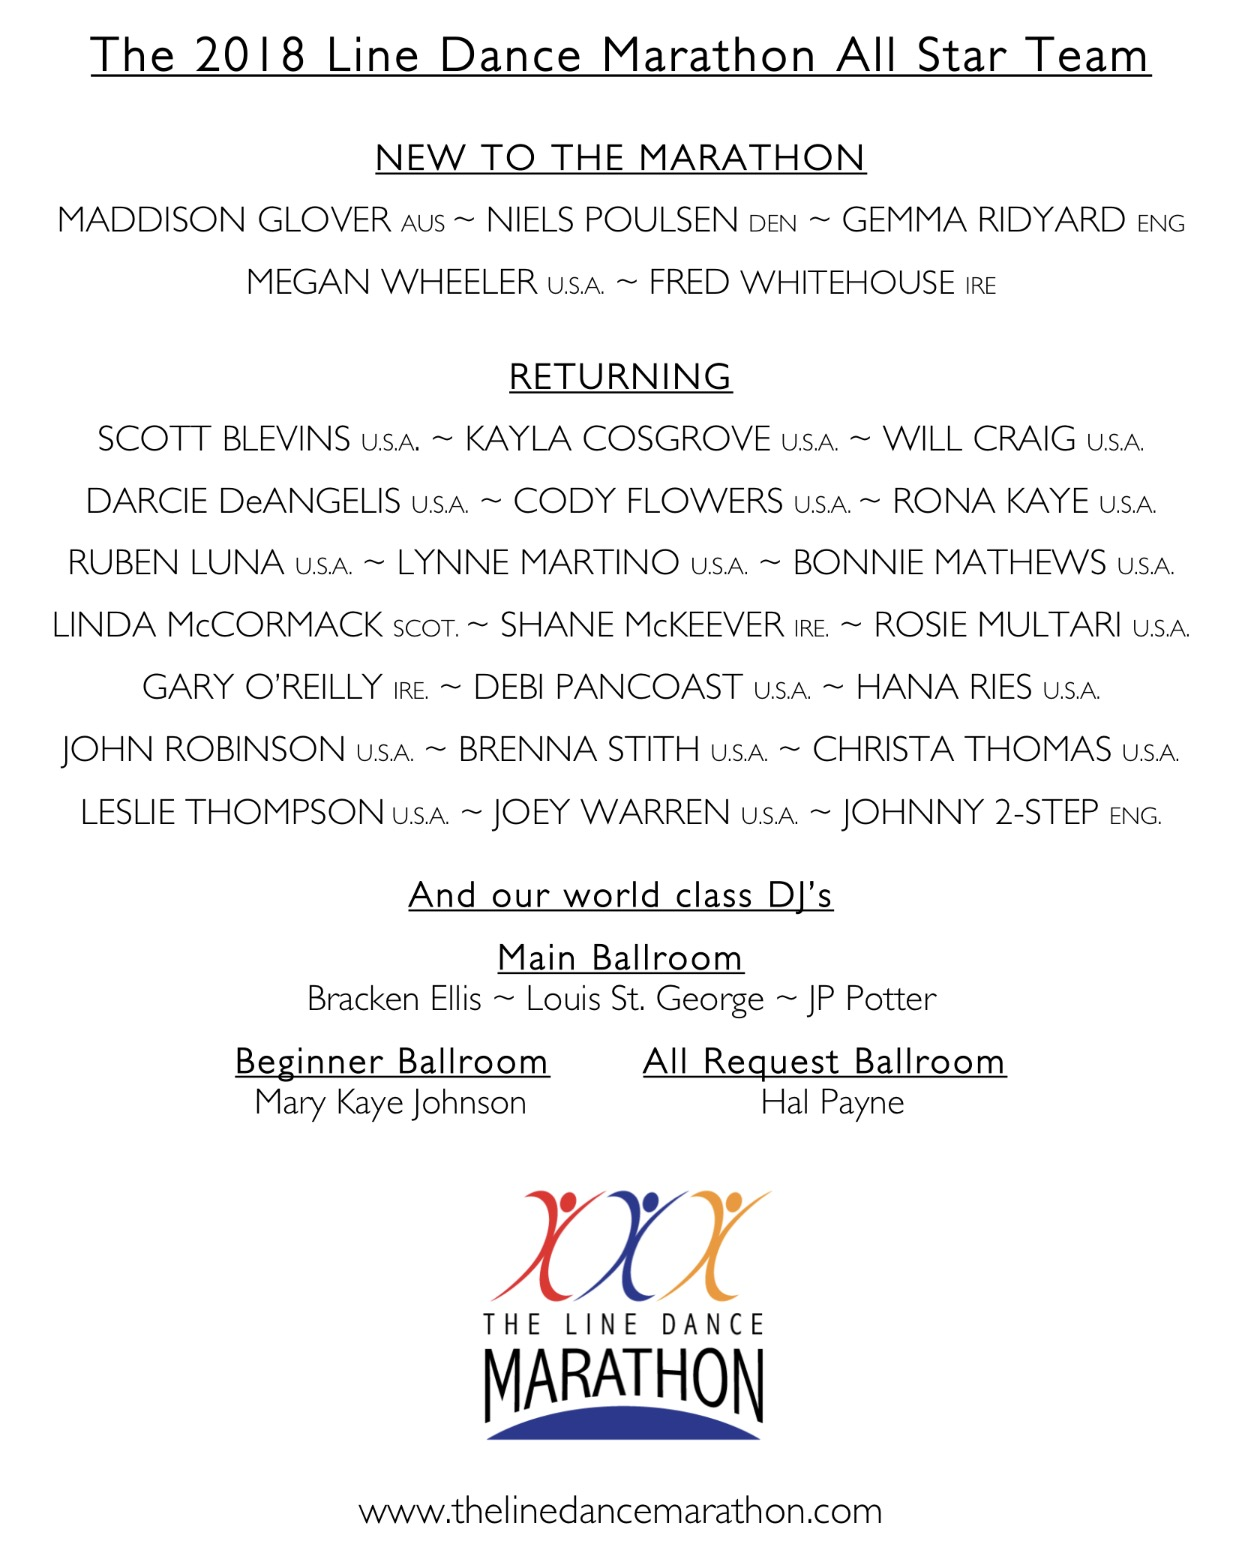 The 2018 Line Dance Marathon All Star Team 
NEW TO THE MARATHON 
MADDISON GLOVER AUS NIELS POULSEN DEN GEMMA RIDYARD ENG 
MEGAN WHEELER U.S.A. FRED WHITEHOUSE IRE 
RETURNING 
SCOTT BLEVINS U.S.A. KAYLA COSGROVE U.S.A. 
WILL CRAIG U.S.A. 
DARCIE DeANGELIS U.S.A. CODY FLOWERS U.S.A. RONA KAYE U.S.A. 
RUBEN LUNA U.S.A. LYNNE MARTINO USA BONNIE MATHEWS USA. 
LINDA McCORMACl< SCOT. SHANE Mcl<EEVER IRE. ROSIE MULTARI U.S.A. 
GARY O'REILLY IRE. DEBI PANCOAST U.S.A. HANA RIES U.S.A. 
JOHN ROBINSON USA. BRENNA STITH U.S.A. CHRISTA THOMAS U.S.A. 
LESLIE THOMPSON U.S.A. JOEY WARREN U.S.A. JOHNNY 2-STEP ENG. 
And our world class DI's 
Main Ballroom 
Bracken Ellis Louis St. George JP Potter 
Beginner Ballroom 
May Kaye Johnson 
All Request Ballroom 
Hal Payne 
THE LINE DANCE 
MARATHON 
www.thelinedancemarathon.com 